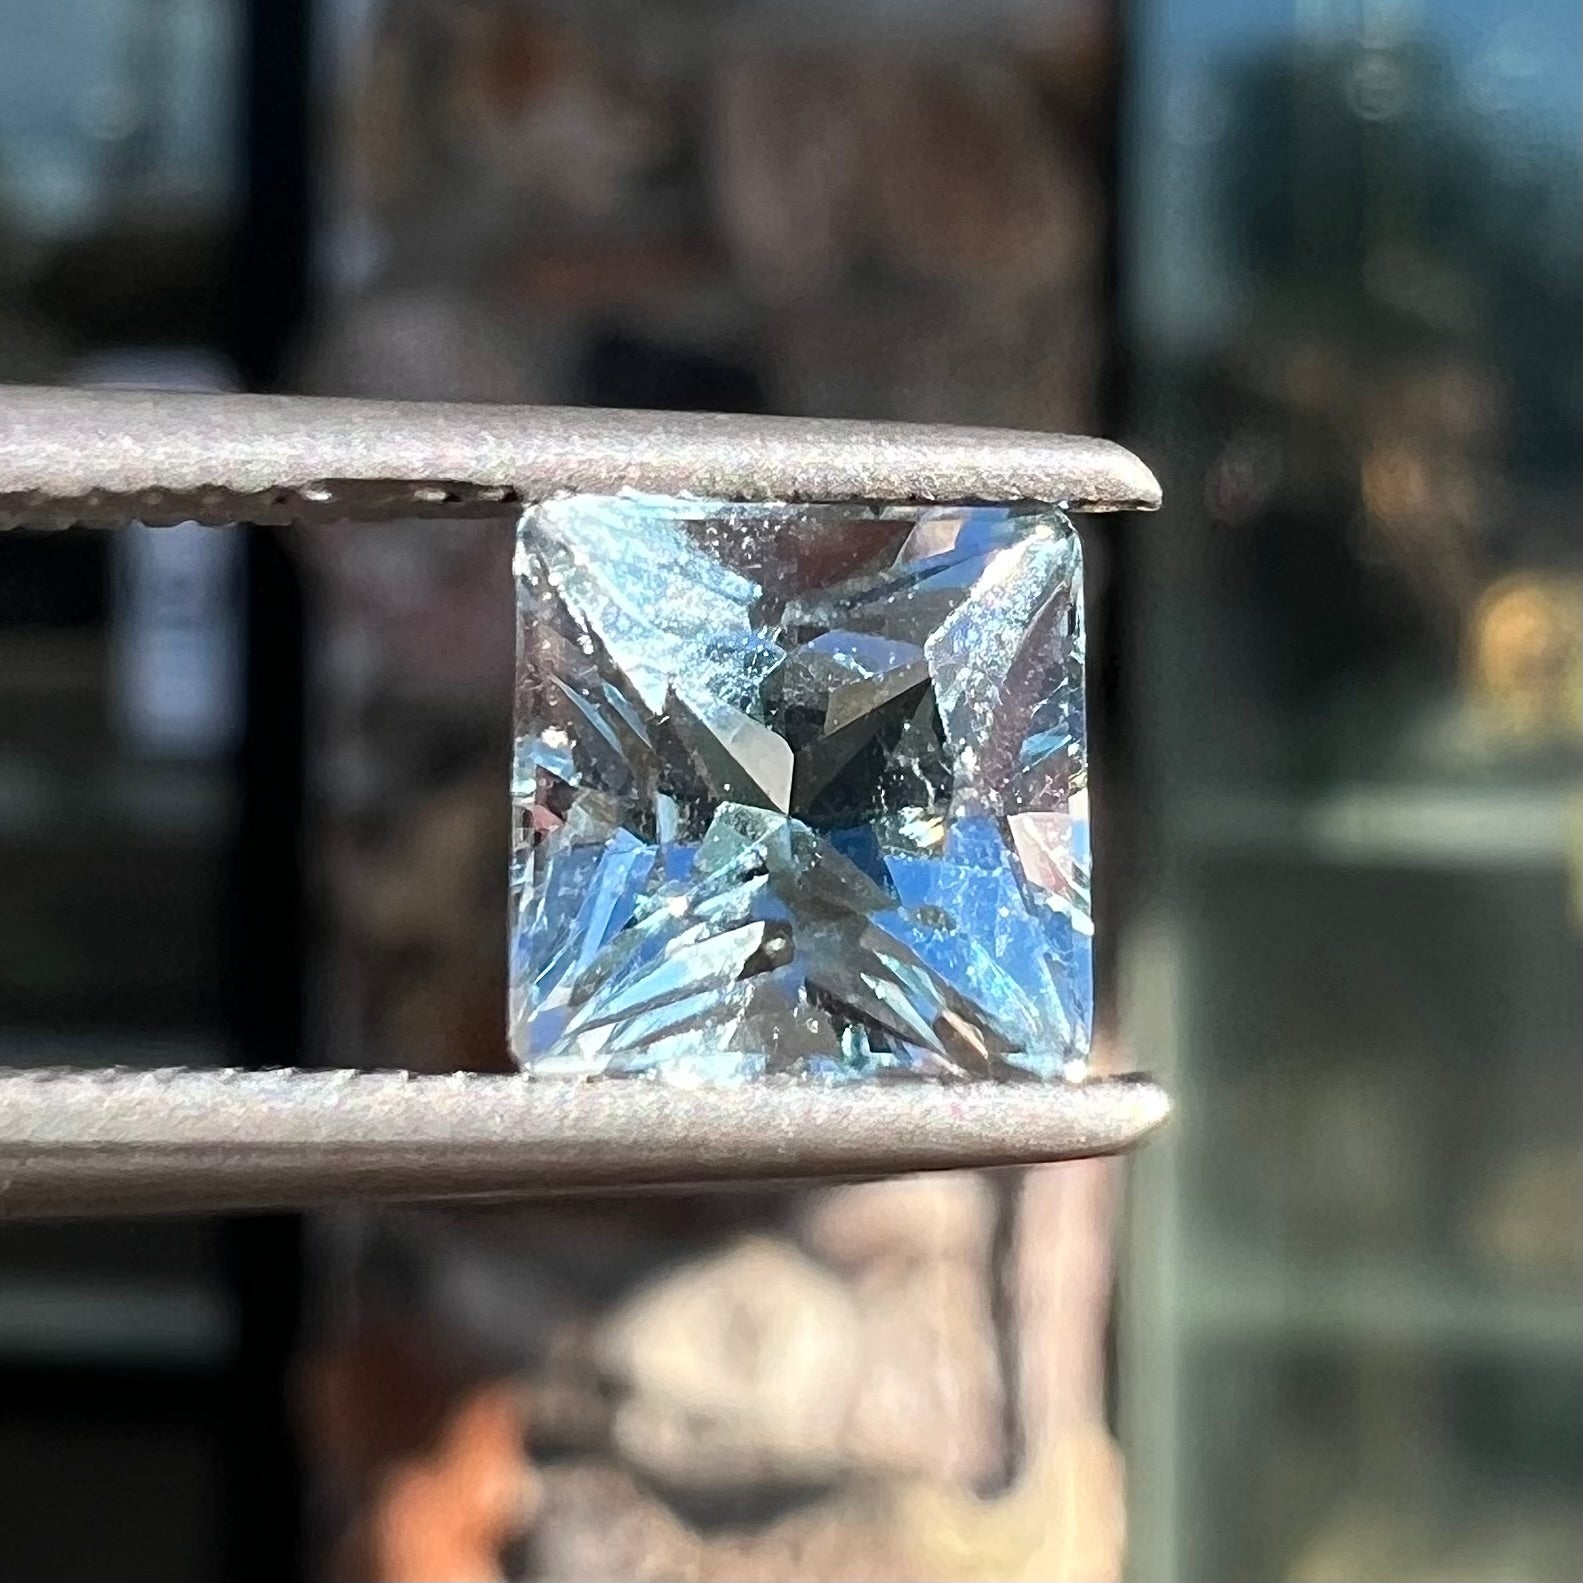 A loose, princess cut aquamarine gemstone.  The stone is a light blue color.